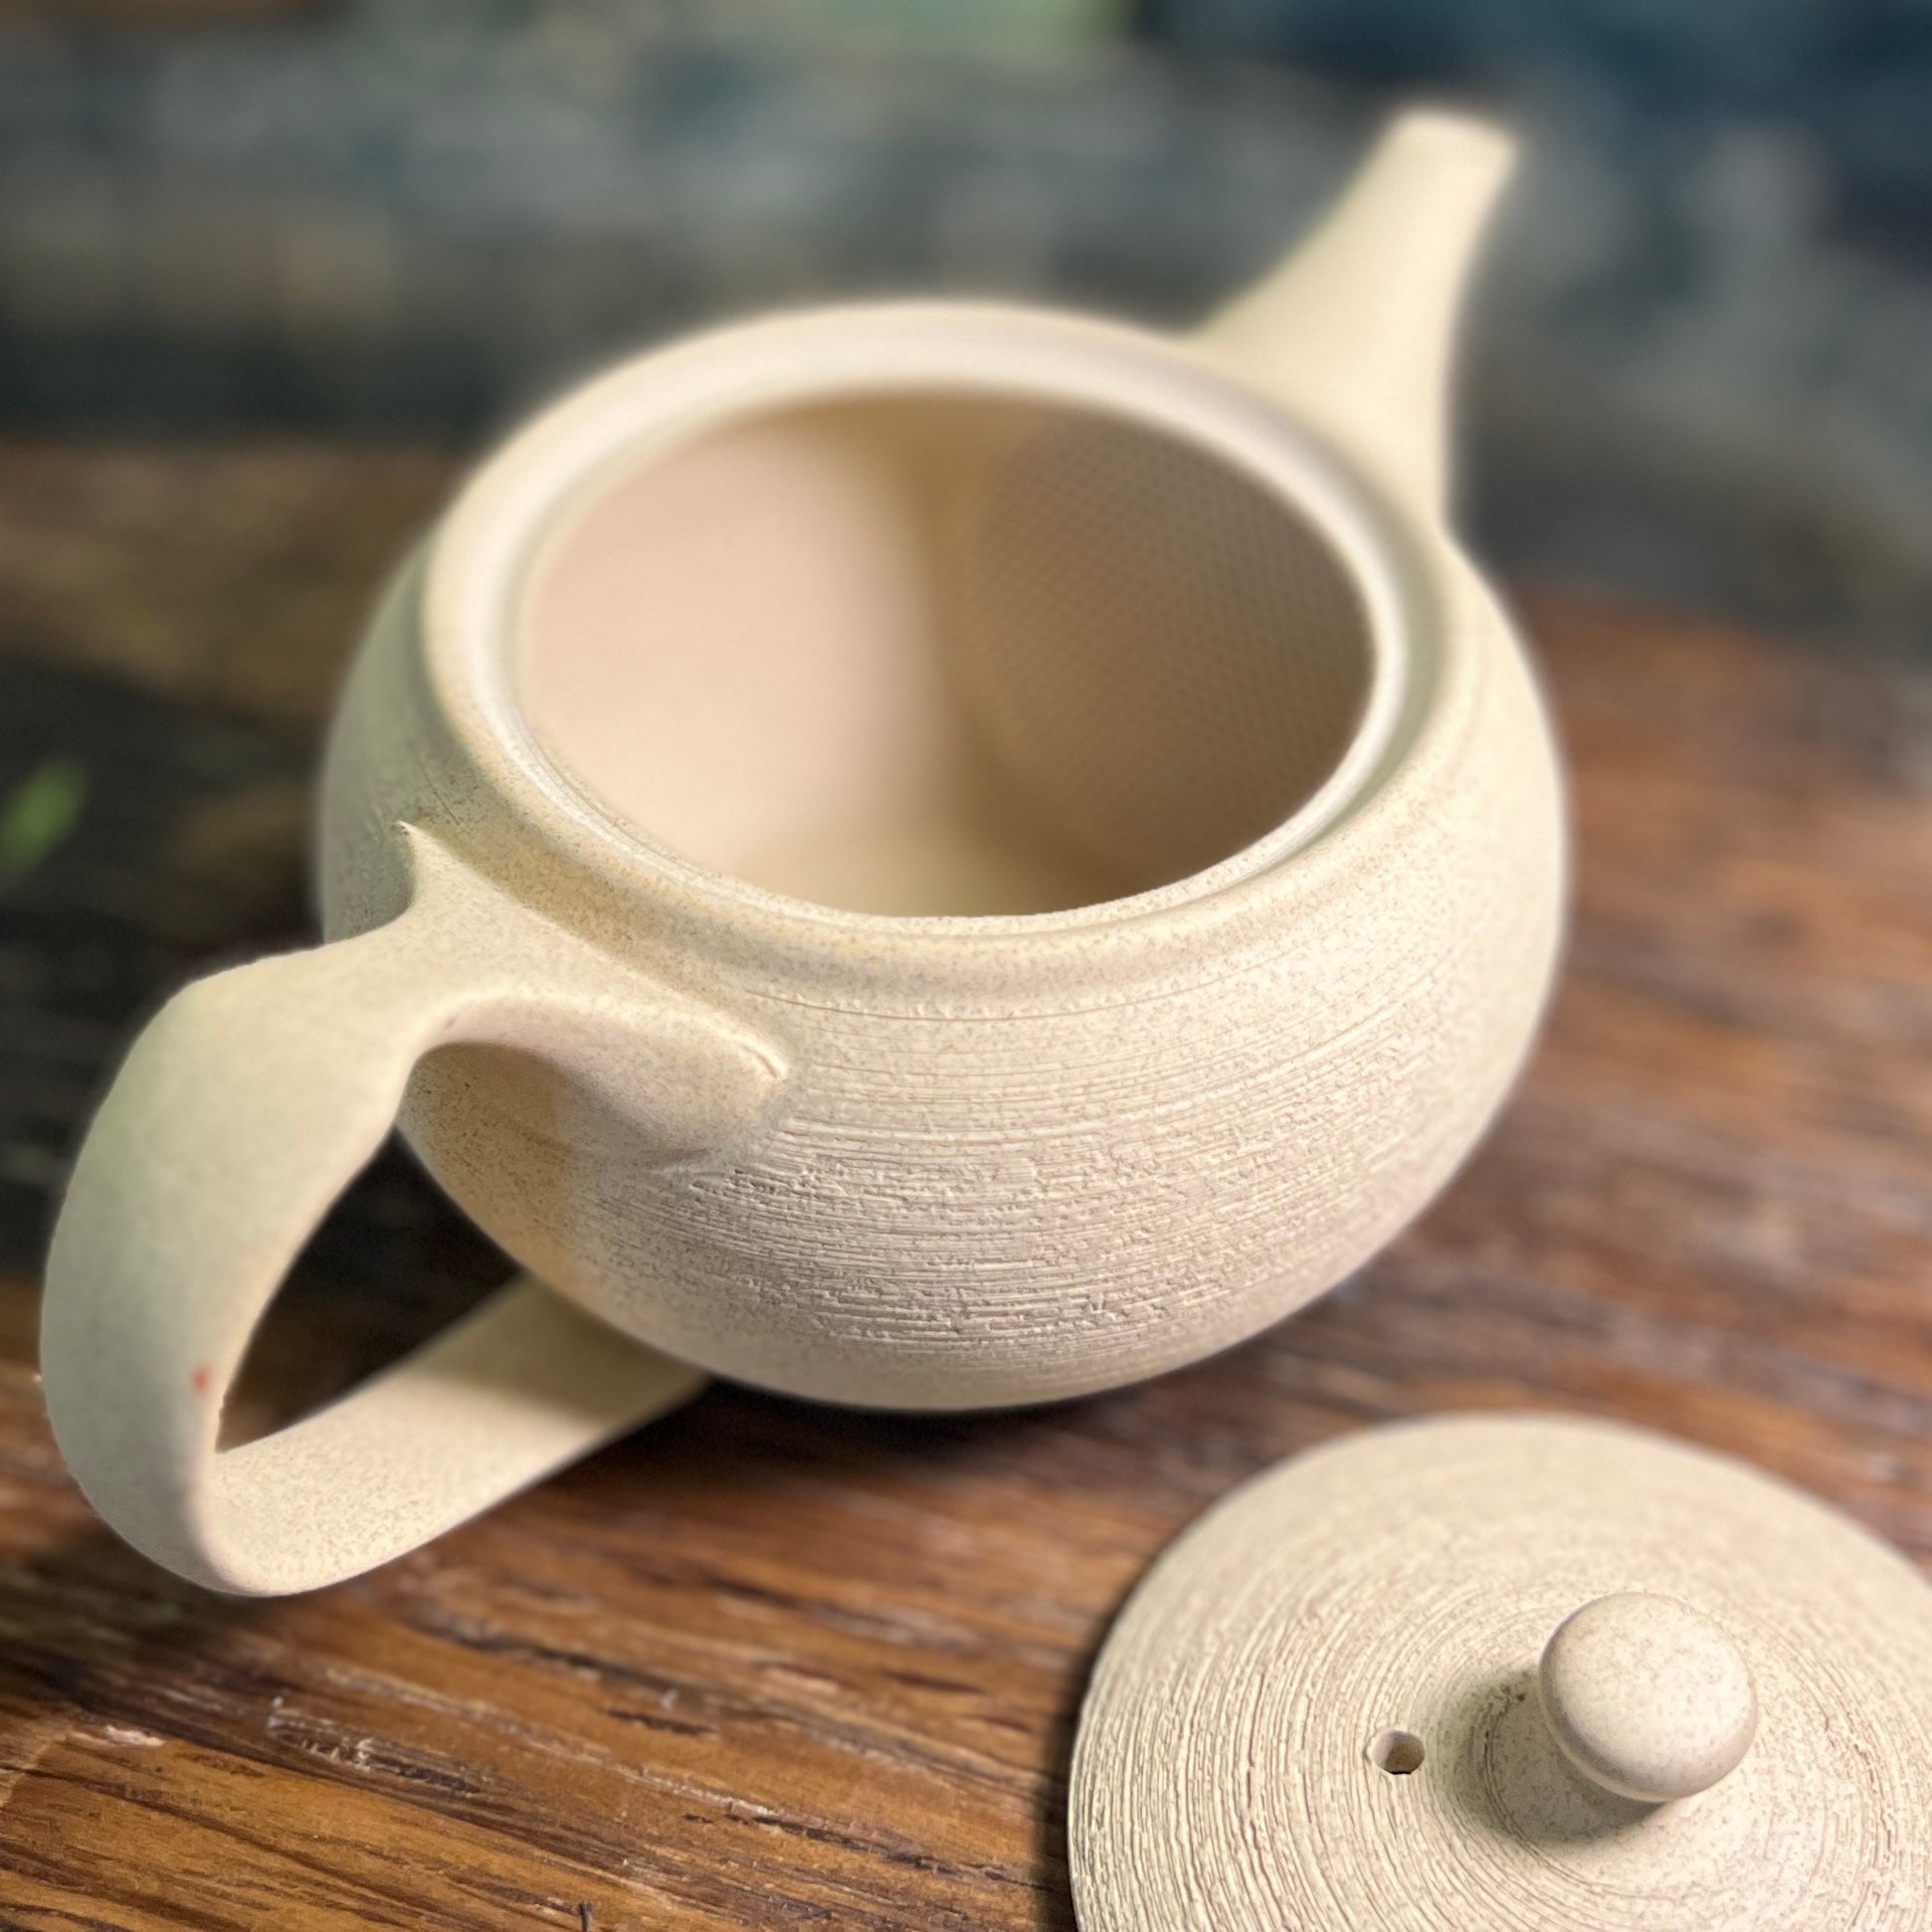 Handmade Japanese Kyusu - Beige Tokoname Teapot